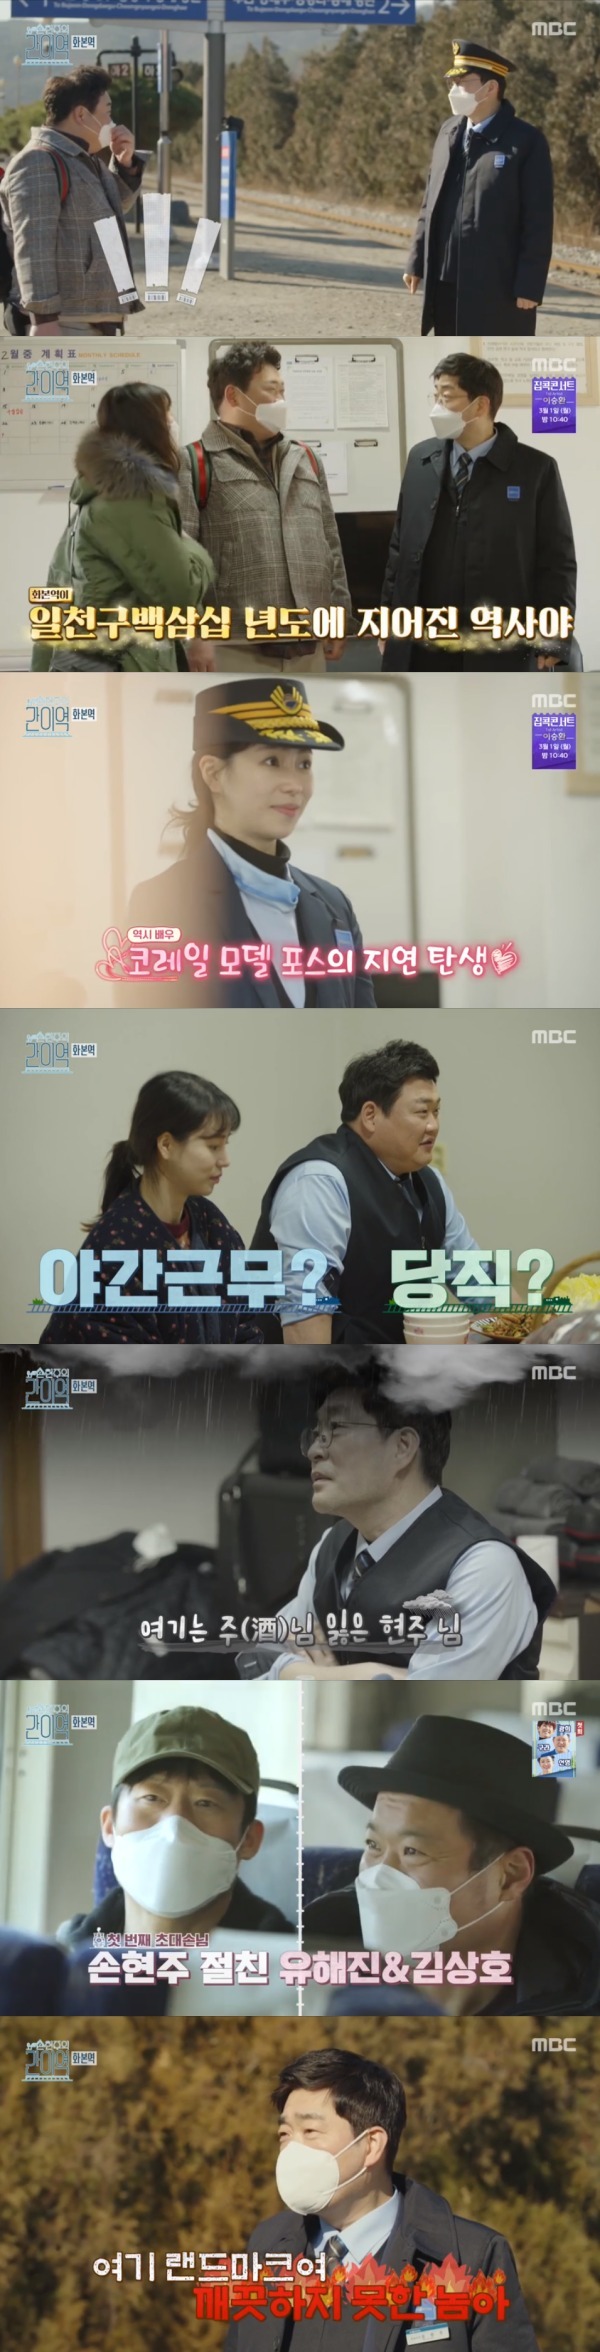 MBC '손현주의 간이역' 방송 화면 캡처 © 뉴스1